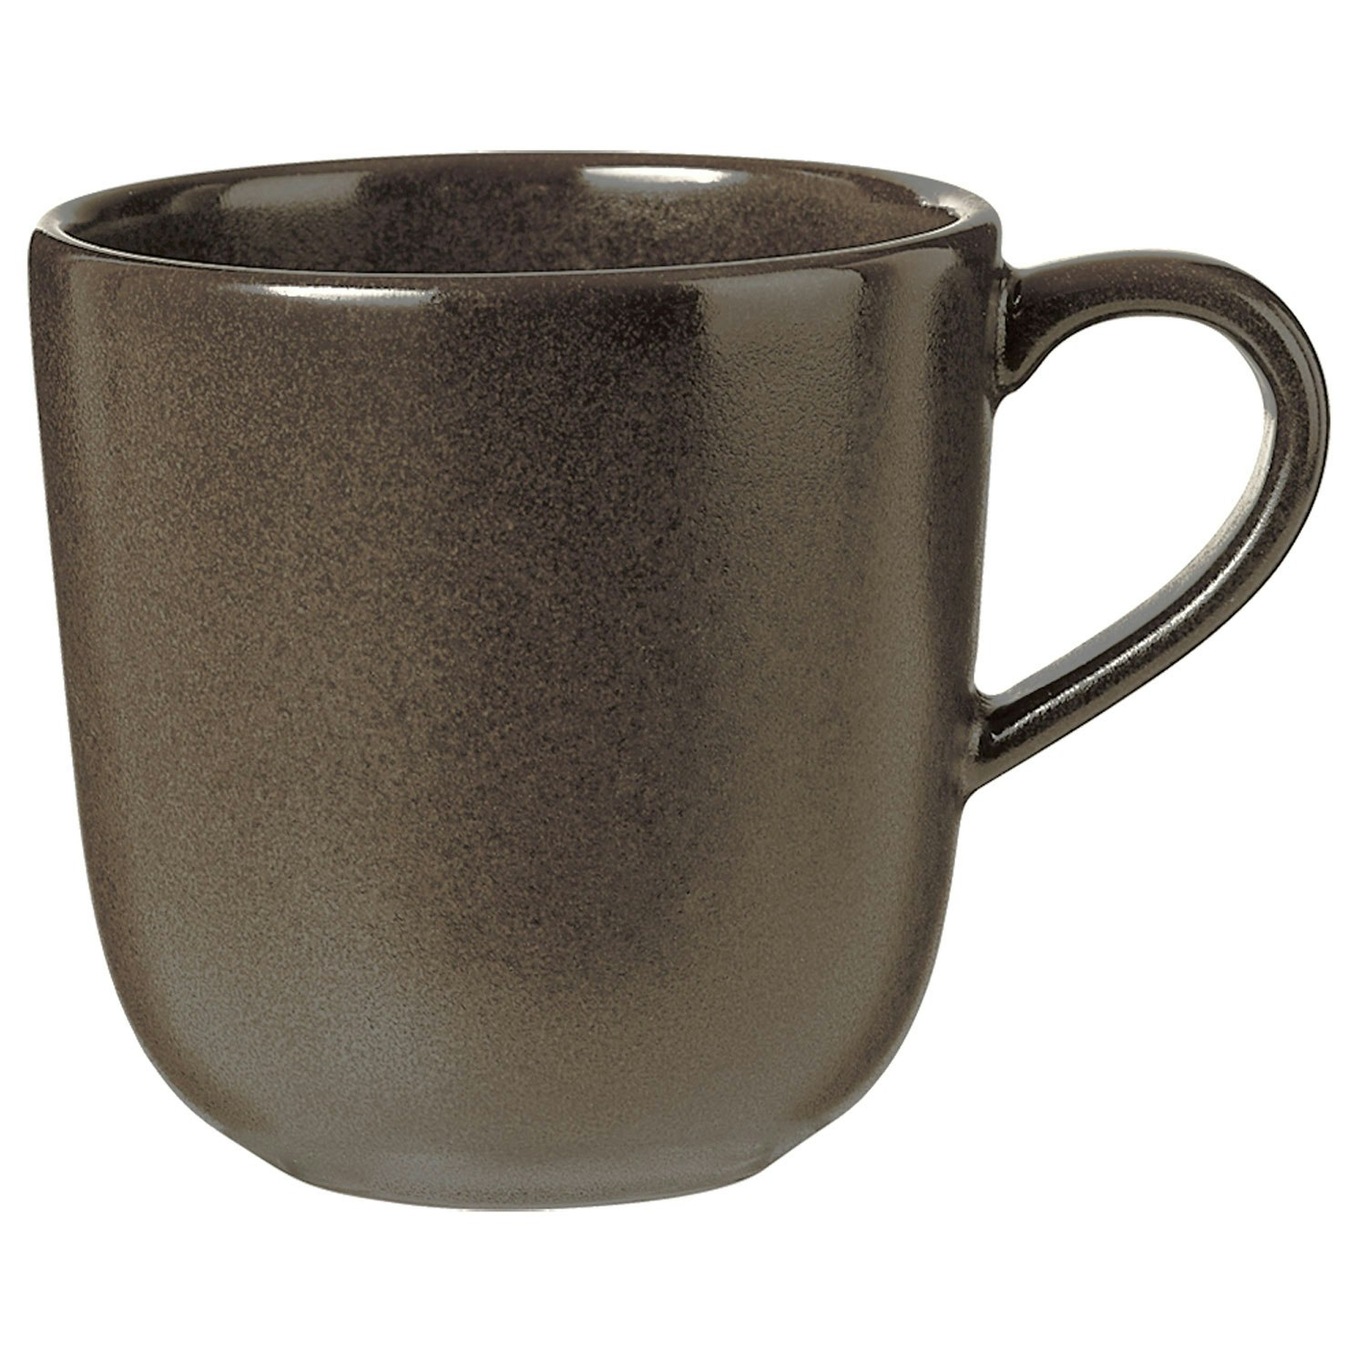 Raw Coffee Mug With Handle 20 cl, Metallic Brown